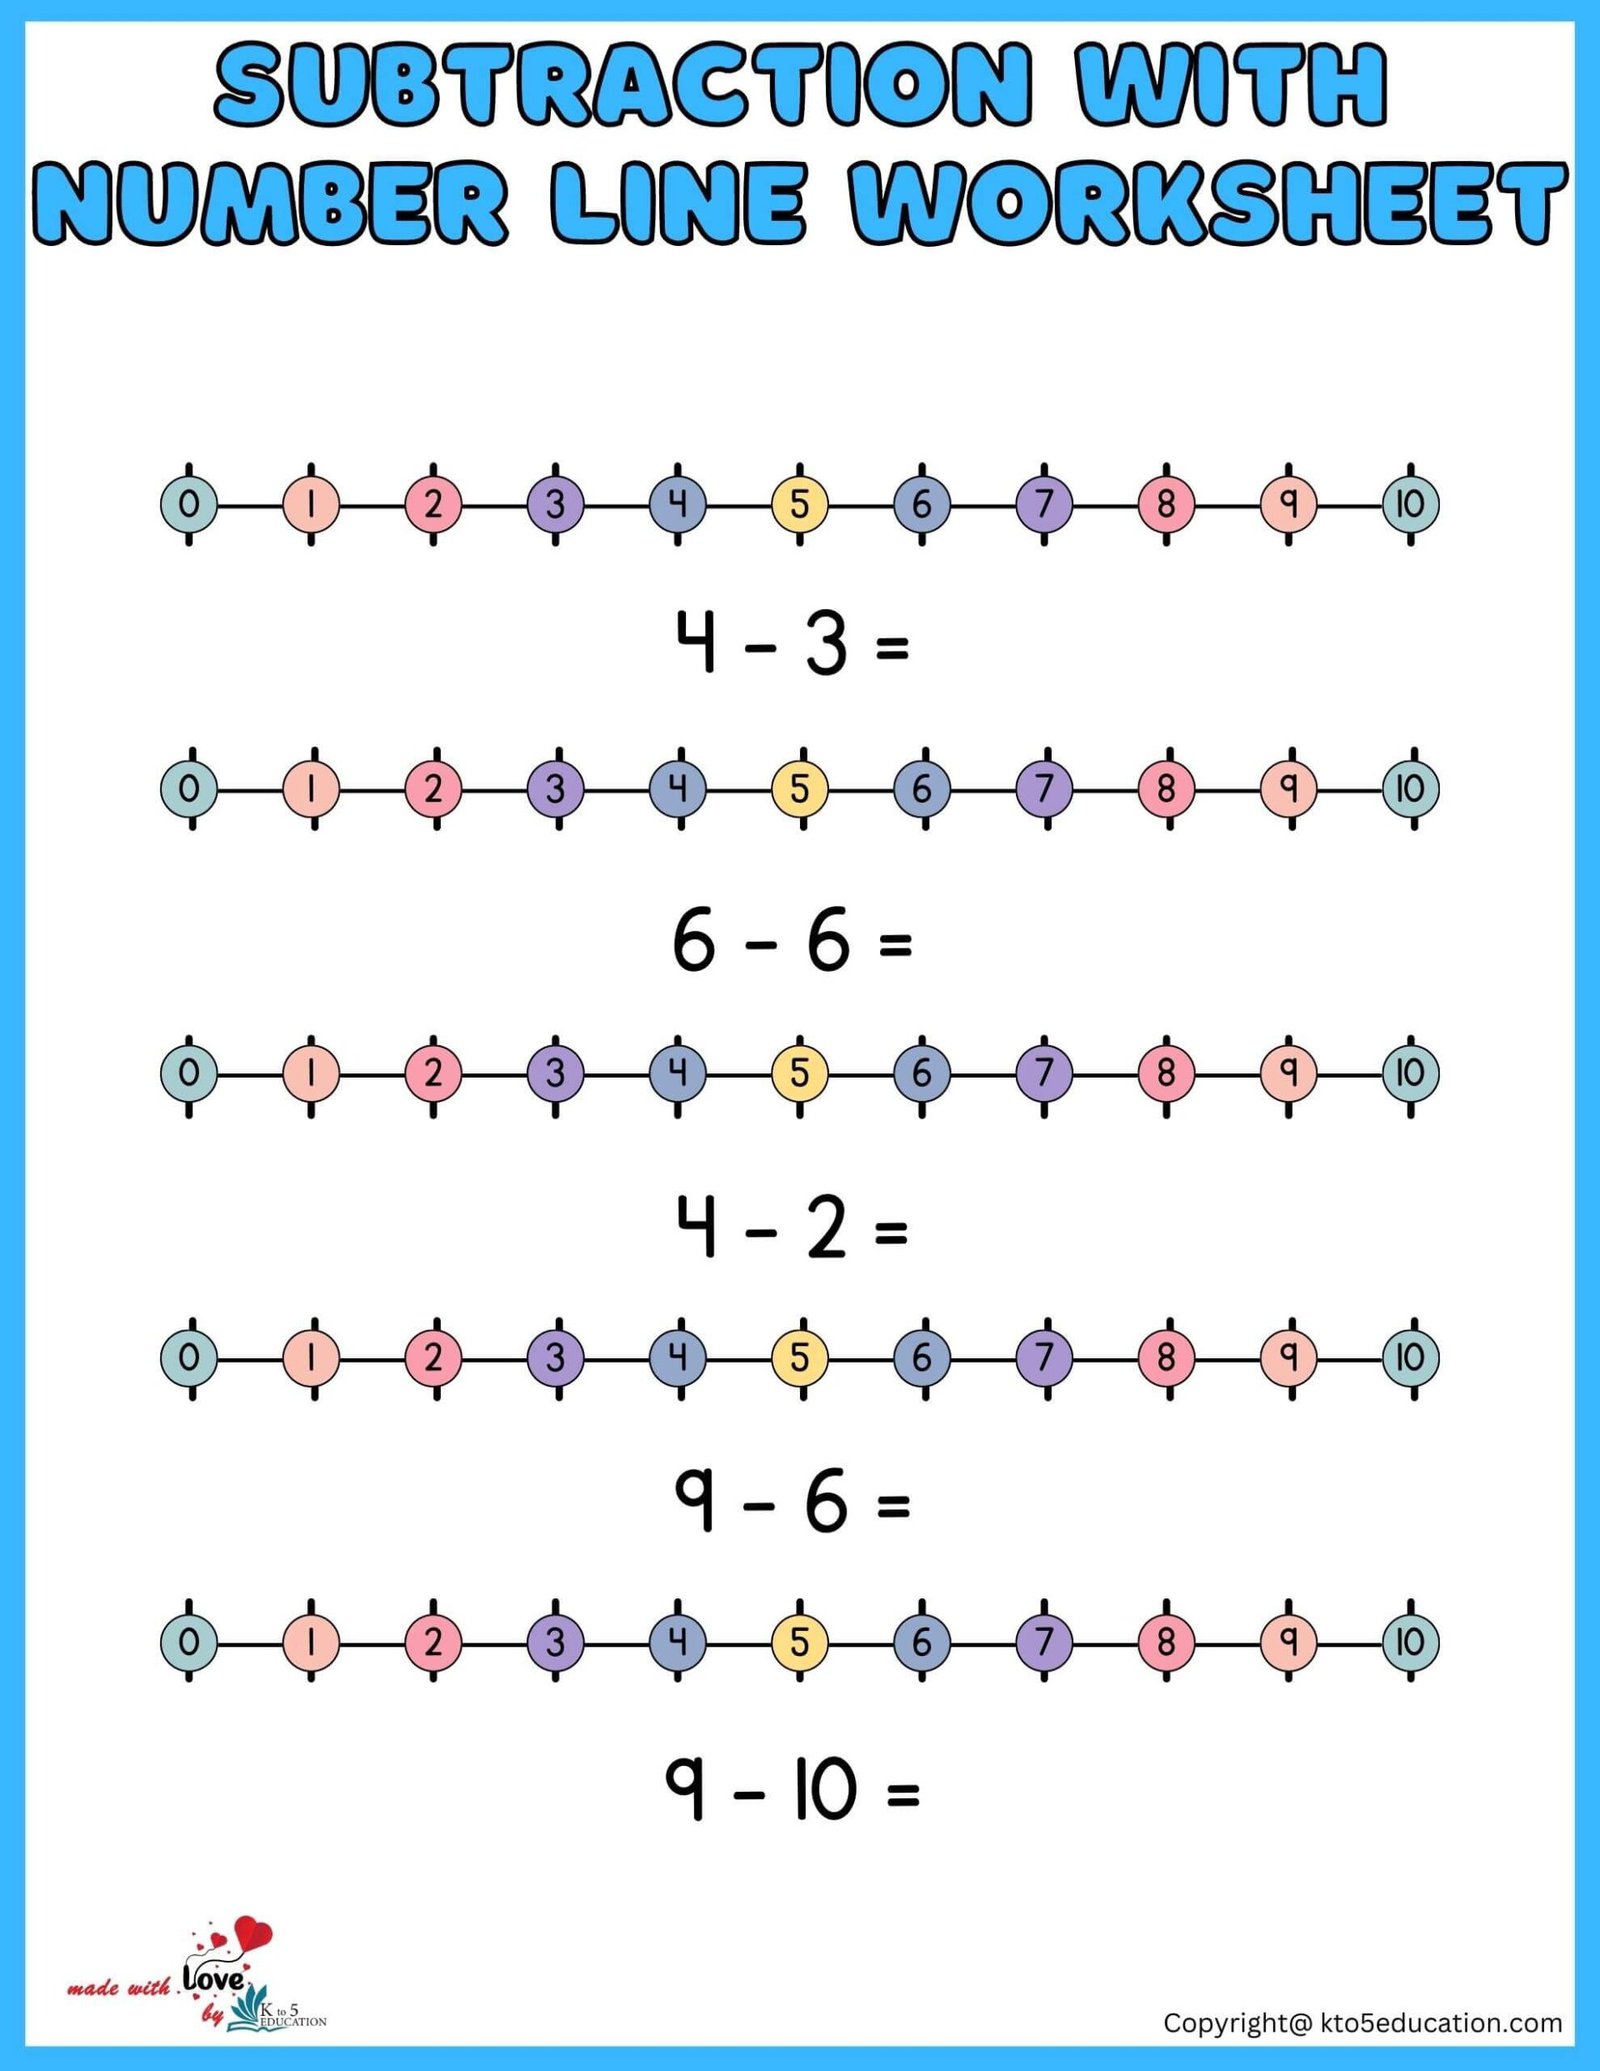 number-line-subtraction-numbers-1-10-10-printable-worksheets-preschool-1st-grade-math-etsy